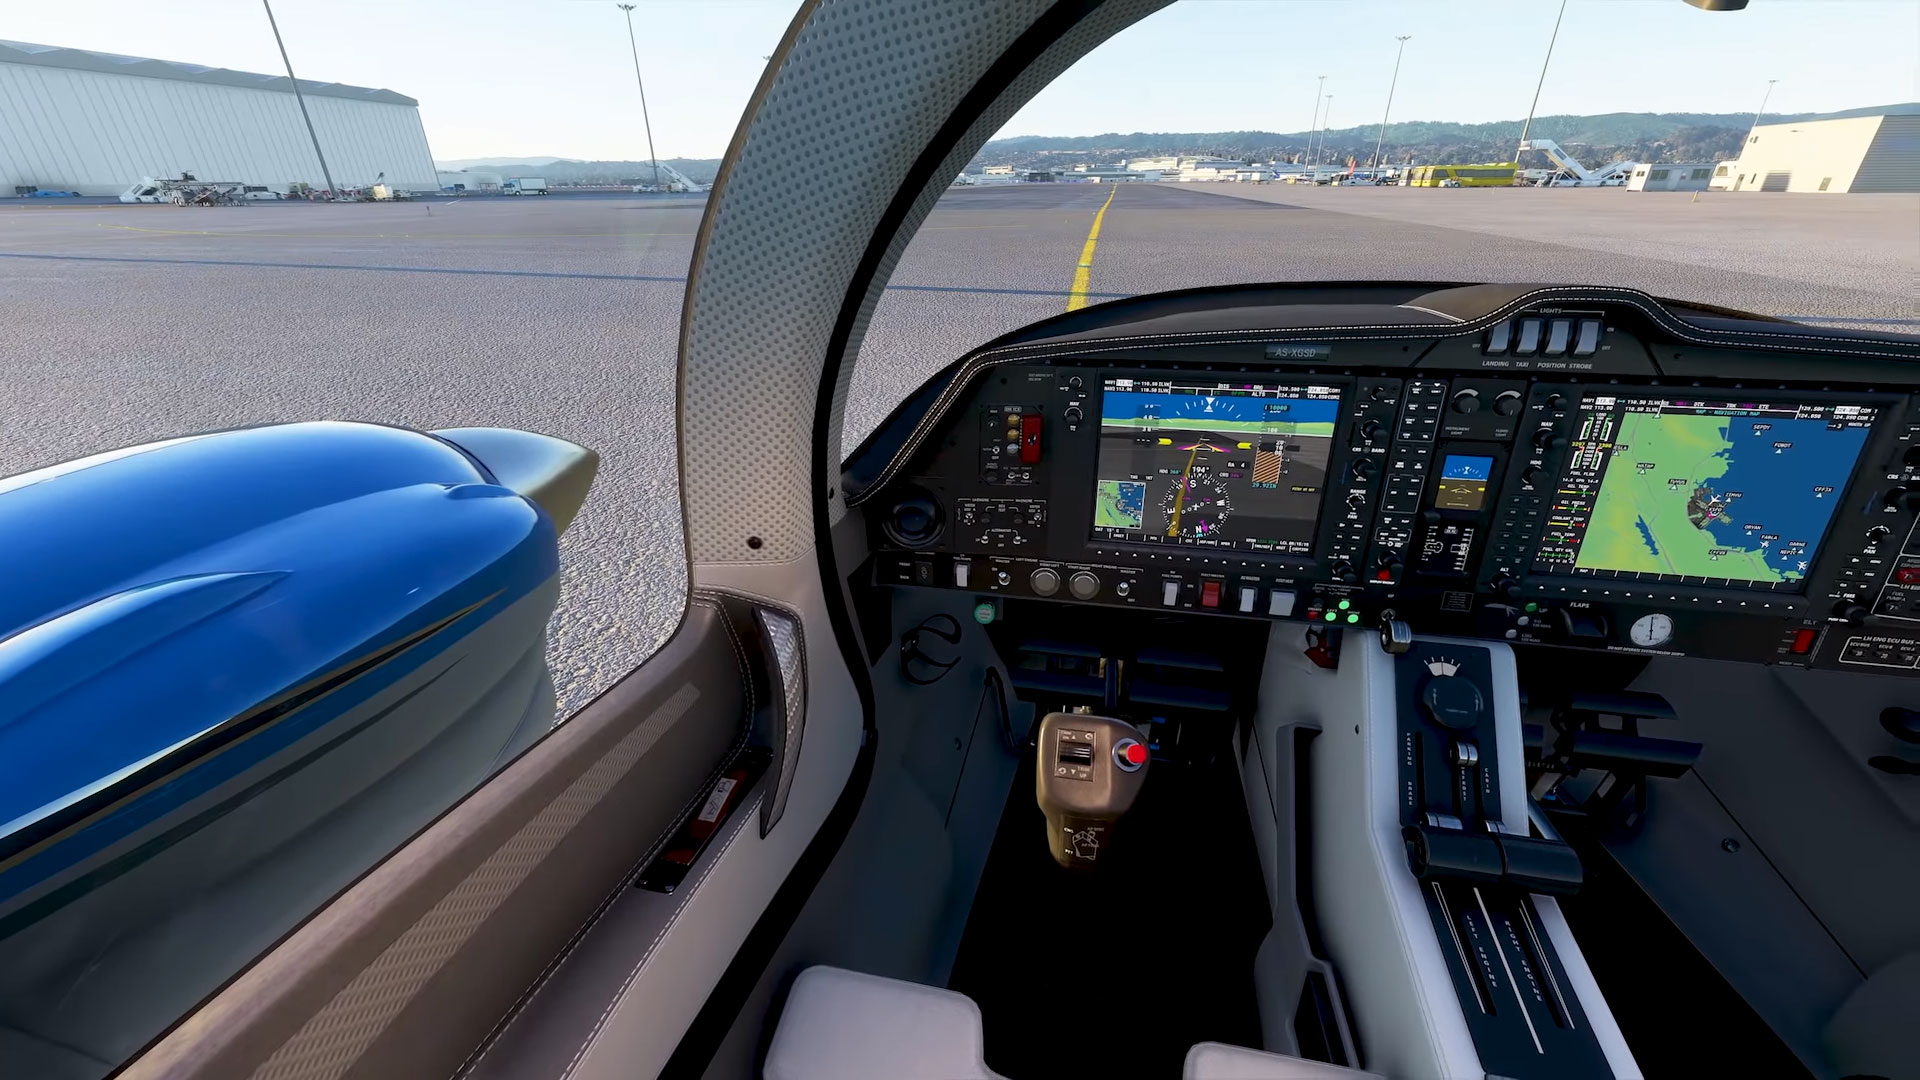 Microsoft Flight Simulator 2020 system requirements